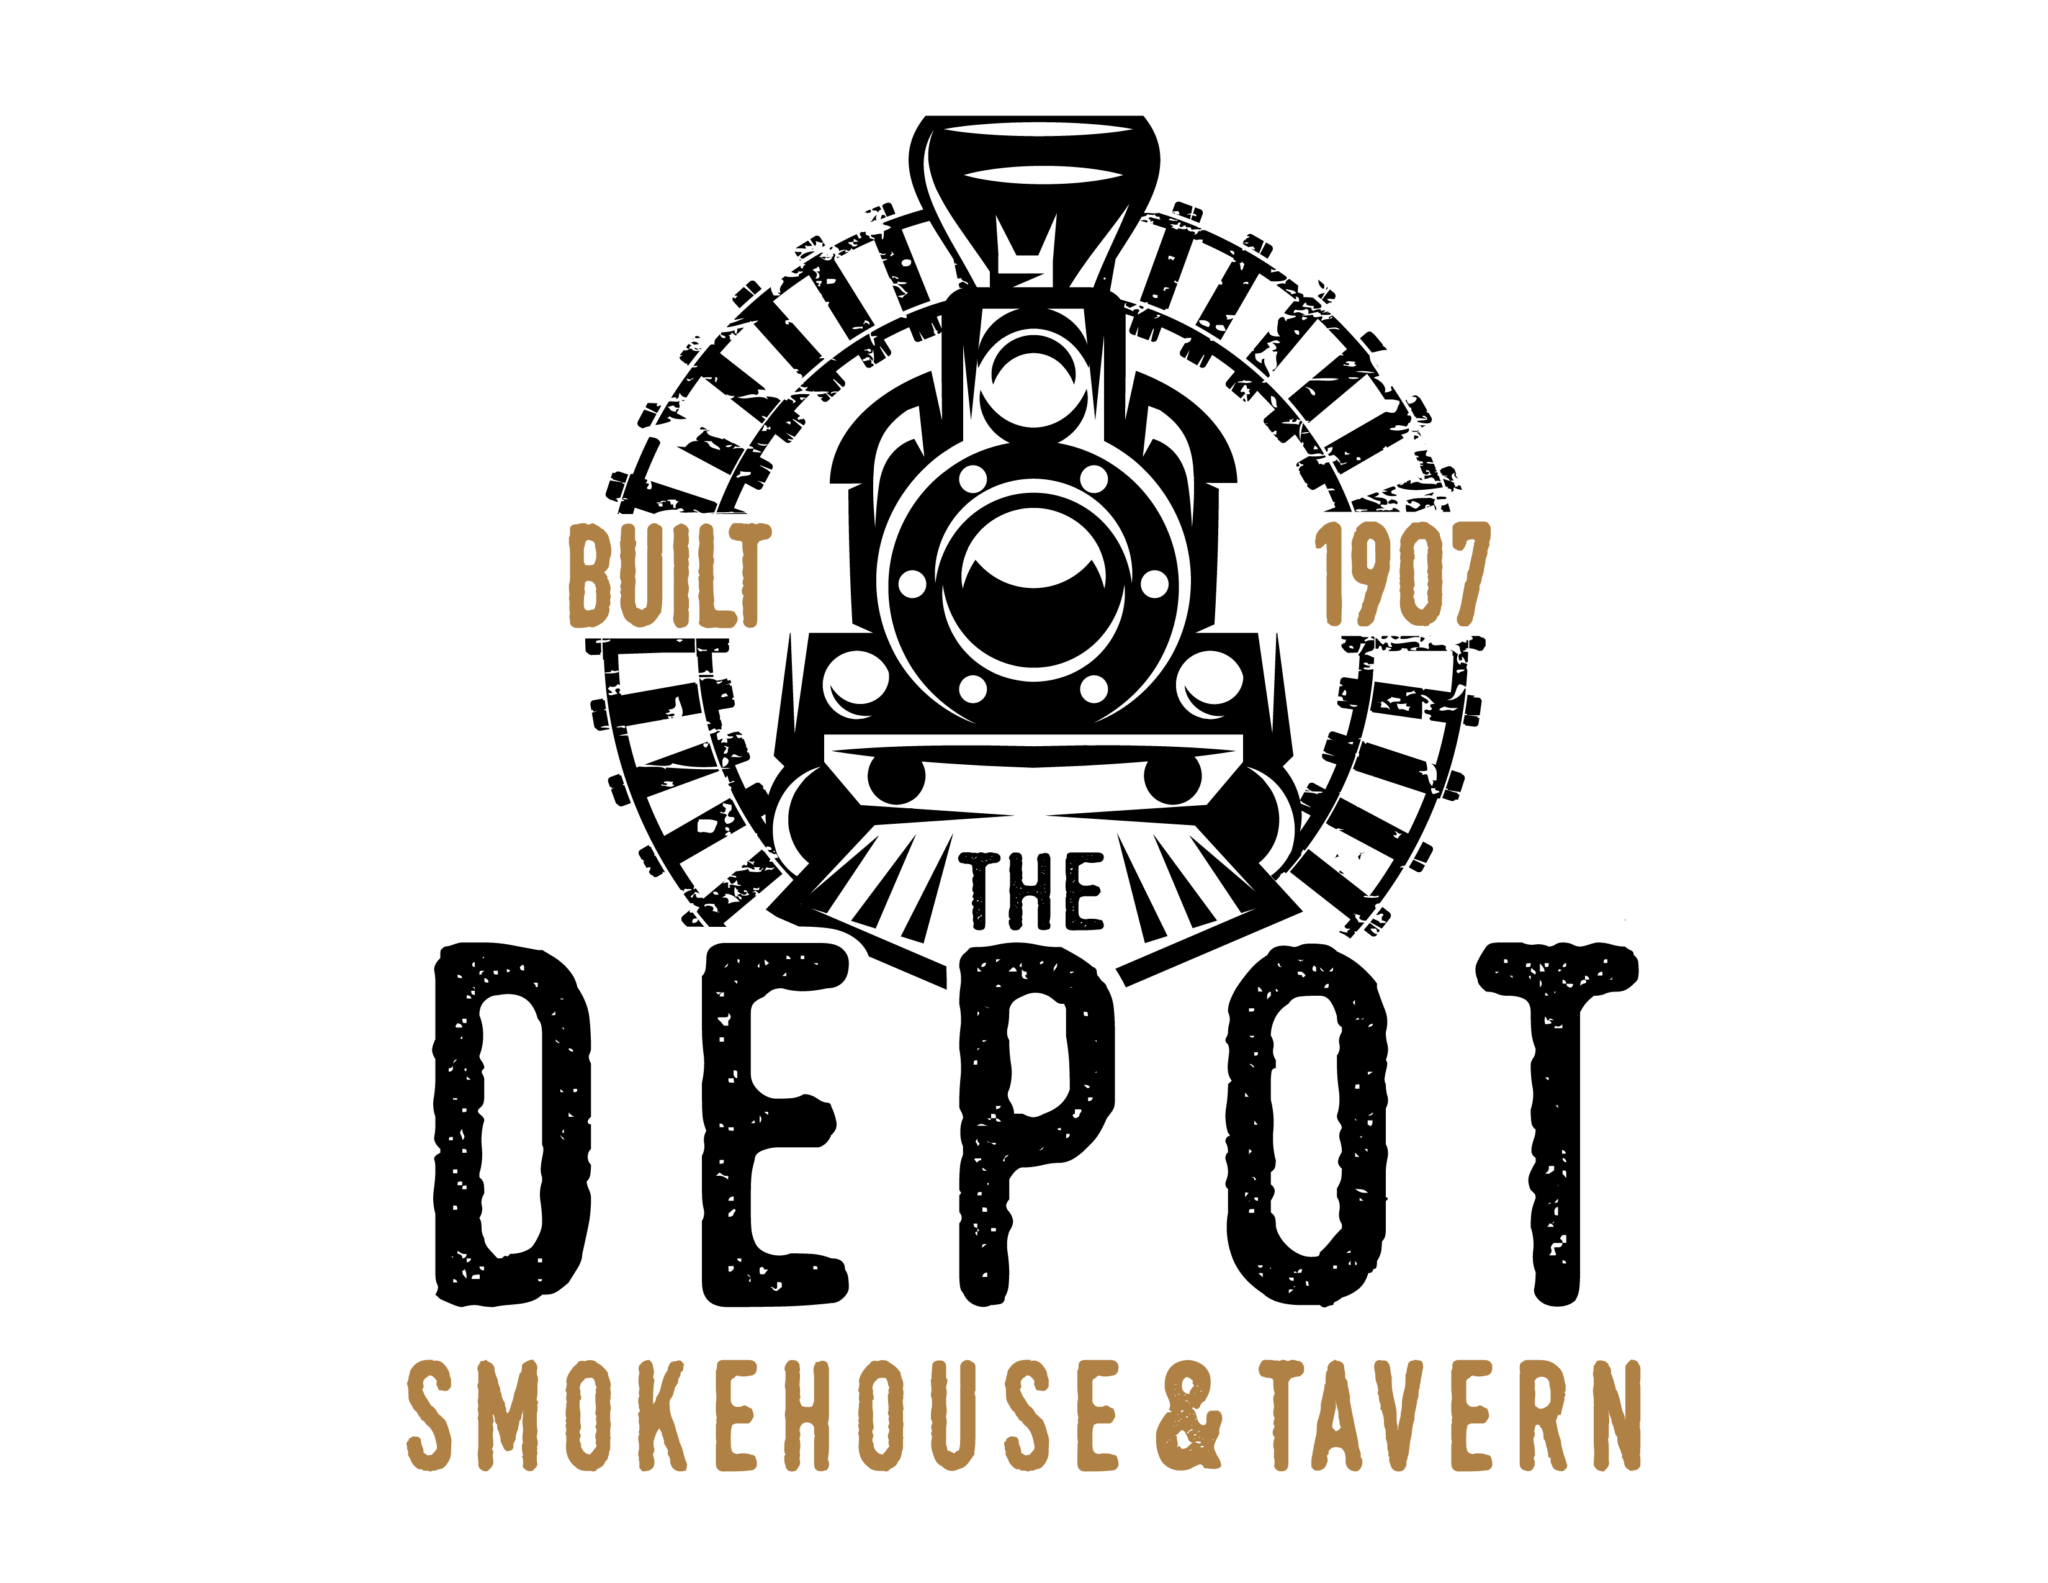 The Depot Smokehouse & Tavern